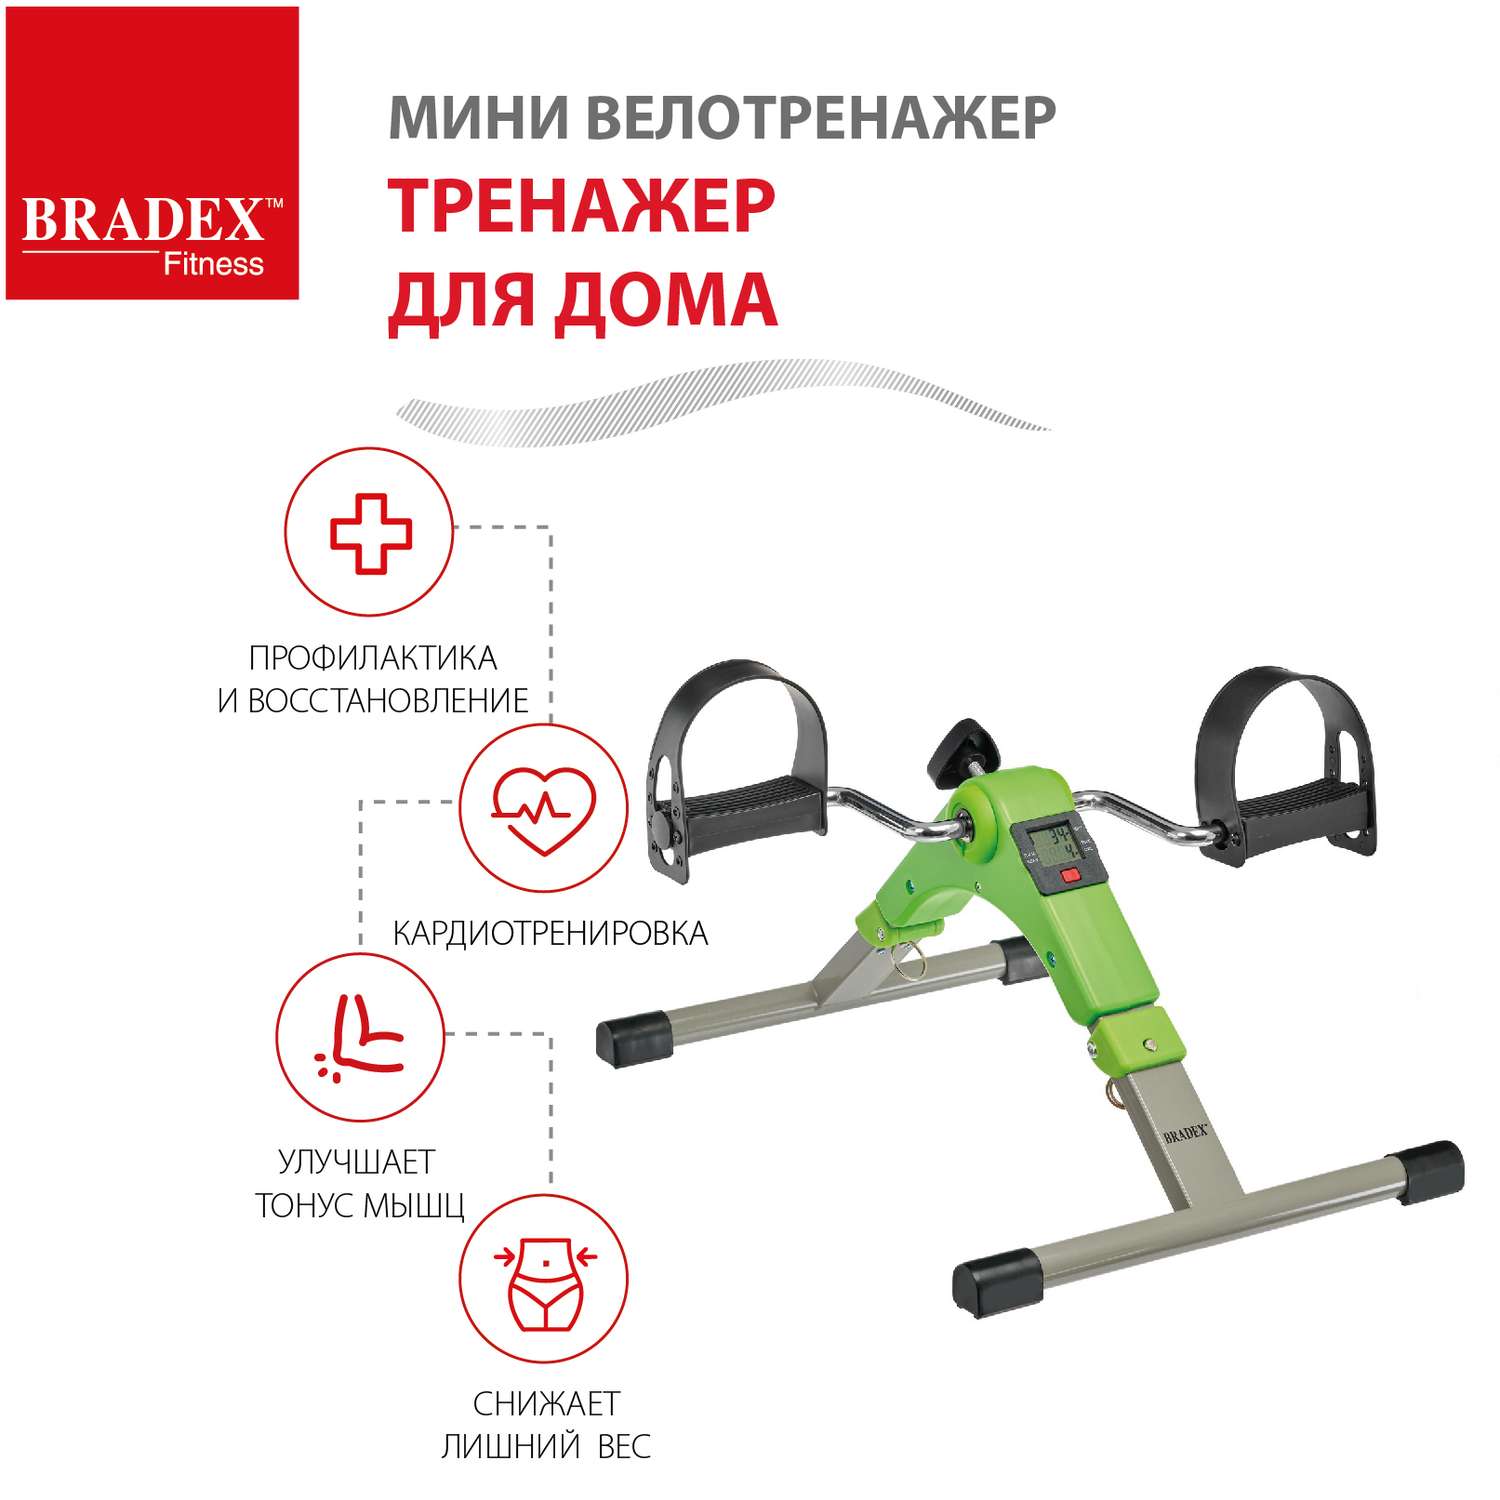 Велотренажер мини для дома Bradex для рук и ног для реабилитации - фото 1